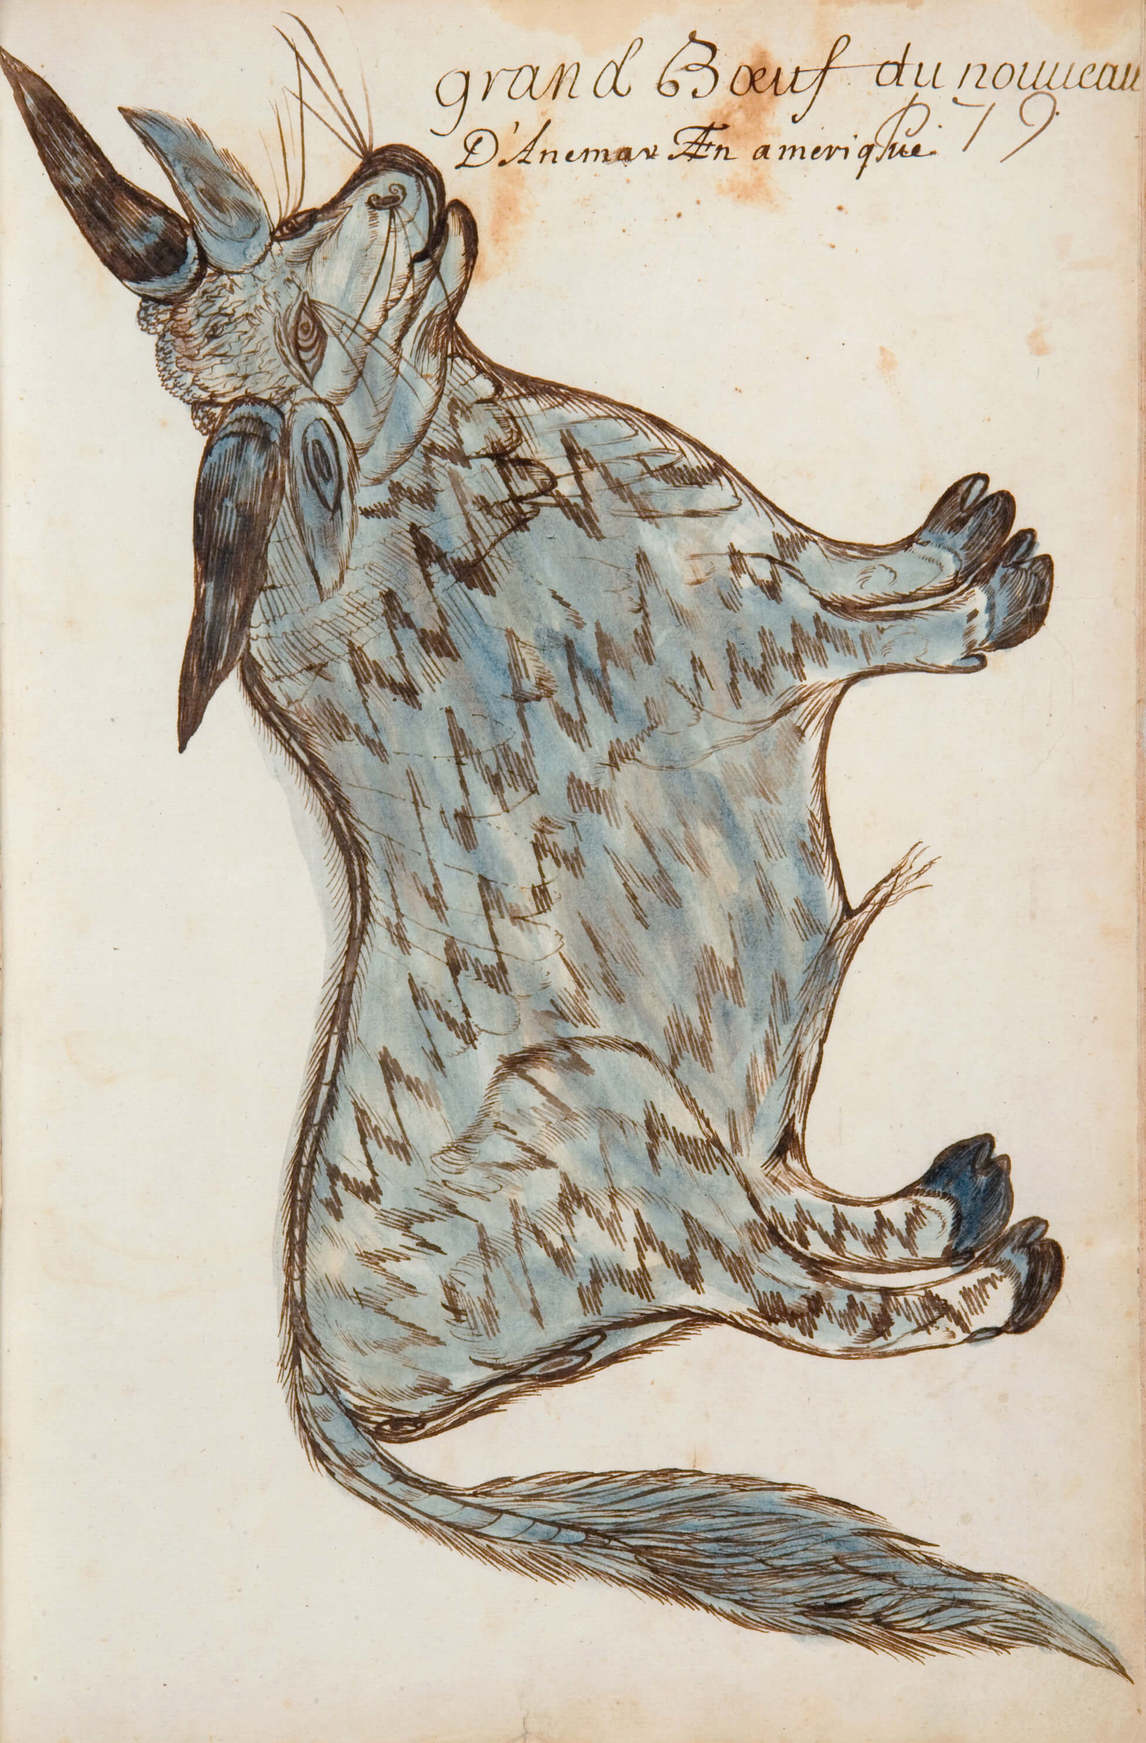 Art Canada Institute, Louis Nicolas, Large Ox of New Denmark in America (grand Boeuf du nouveau D’Anemar En amerique), Codex Canadensis